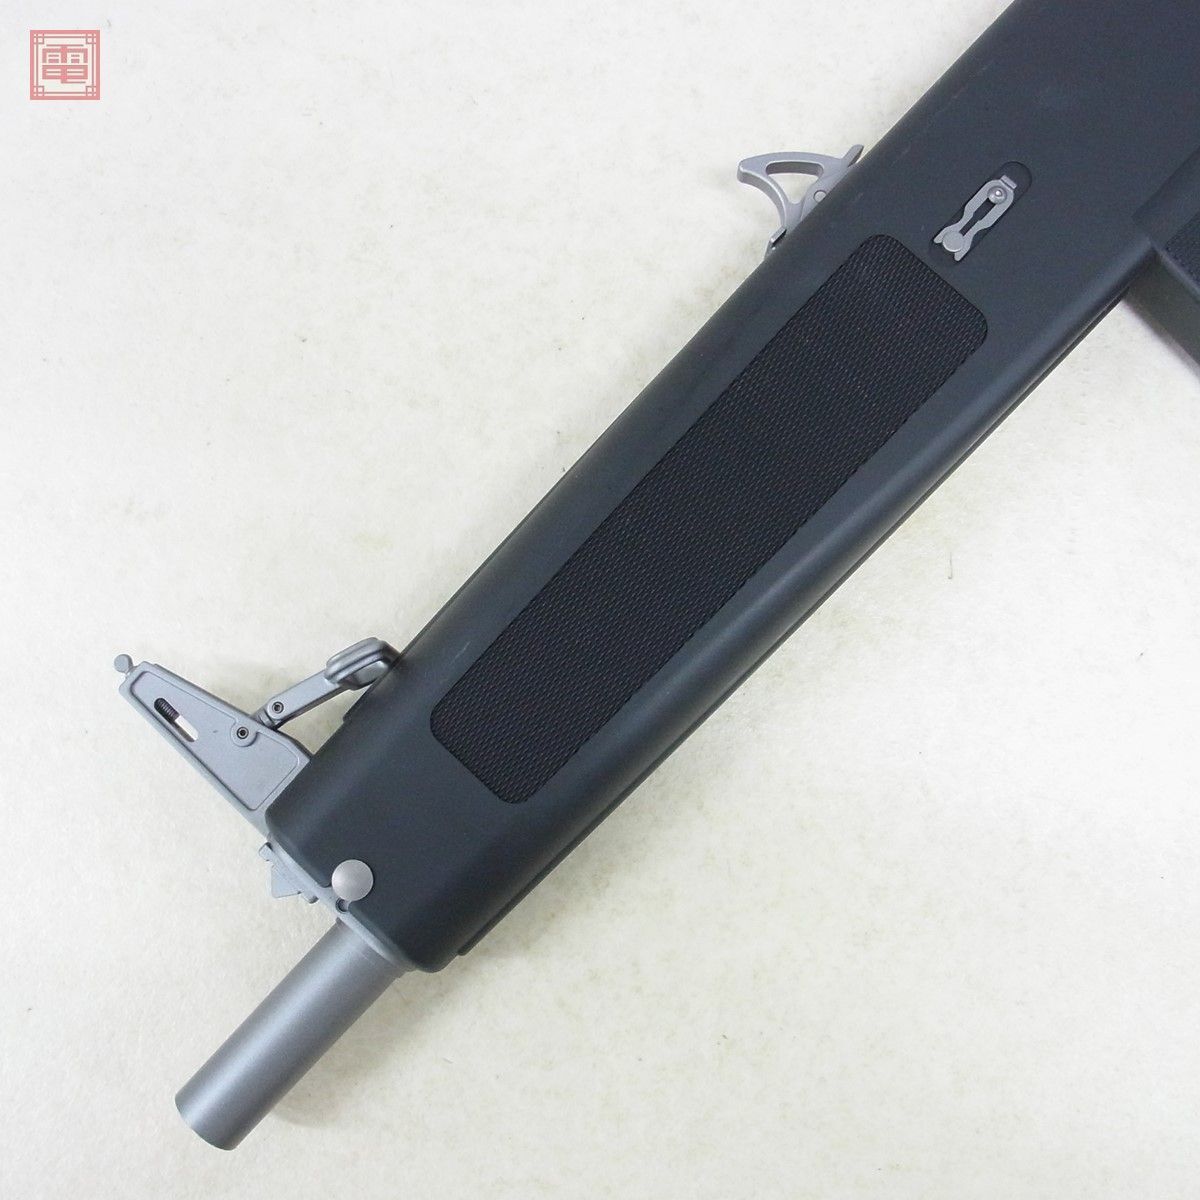  Tokyo Marui electric Schott gun AA-12 SLEDGE HAMMER sledge hammer present condition goods [40